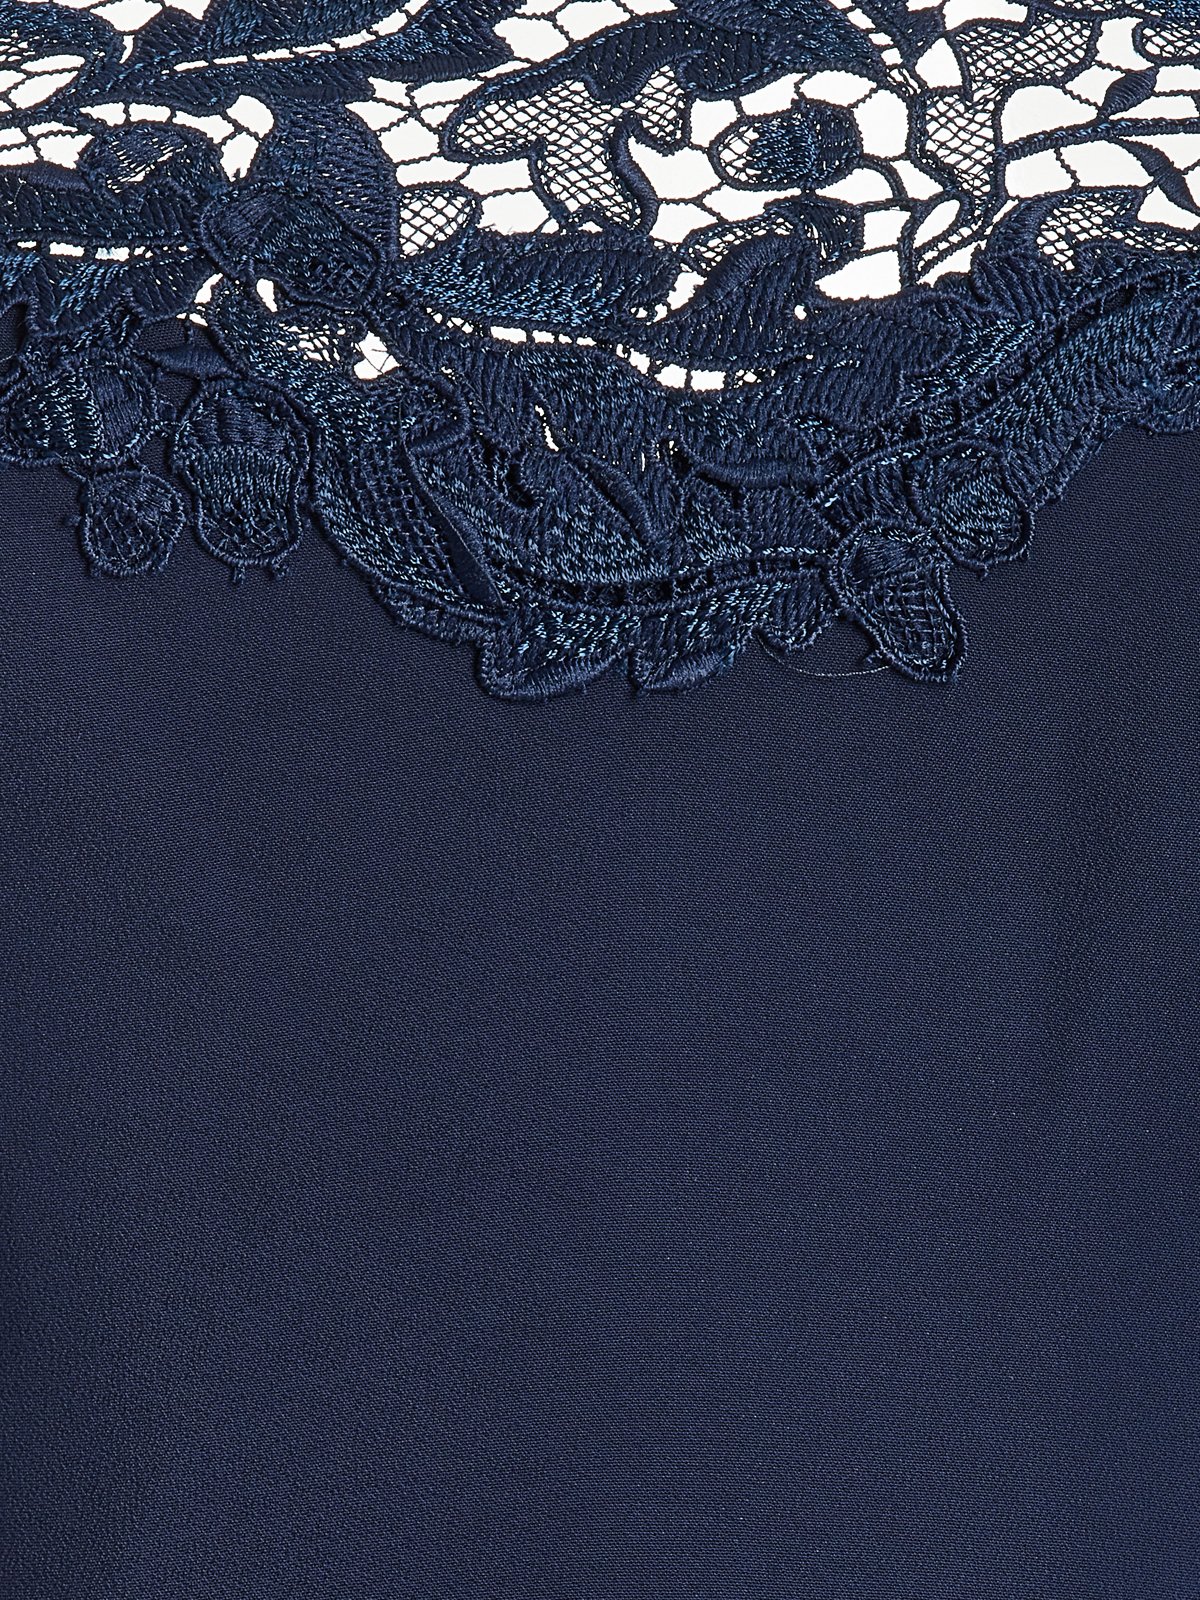 Women Plain Cold Shoulder Three Quarter Sleeve Comfy Casual Lace Maxi Dress